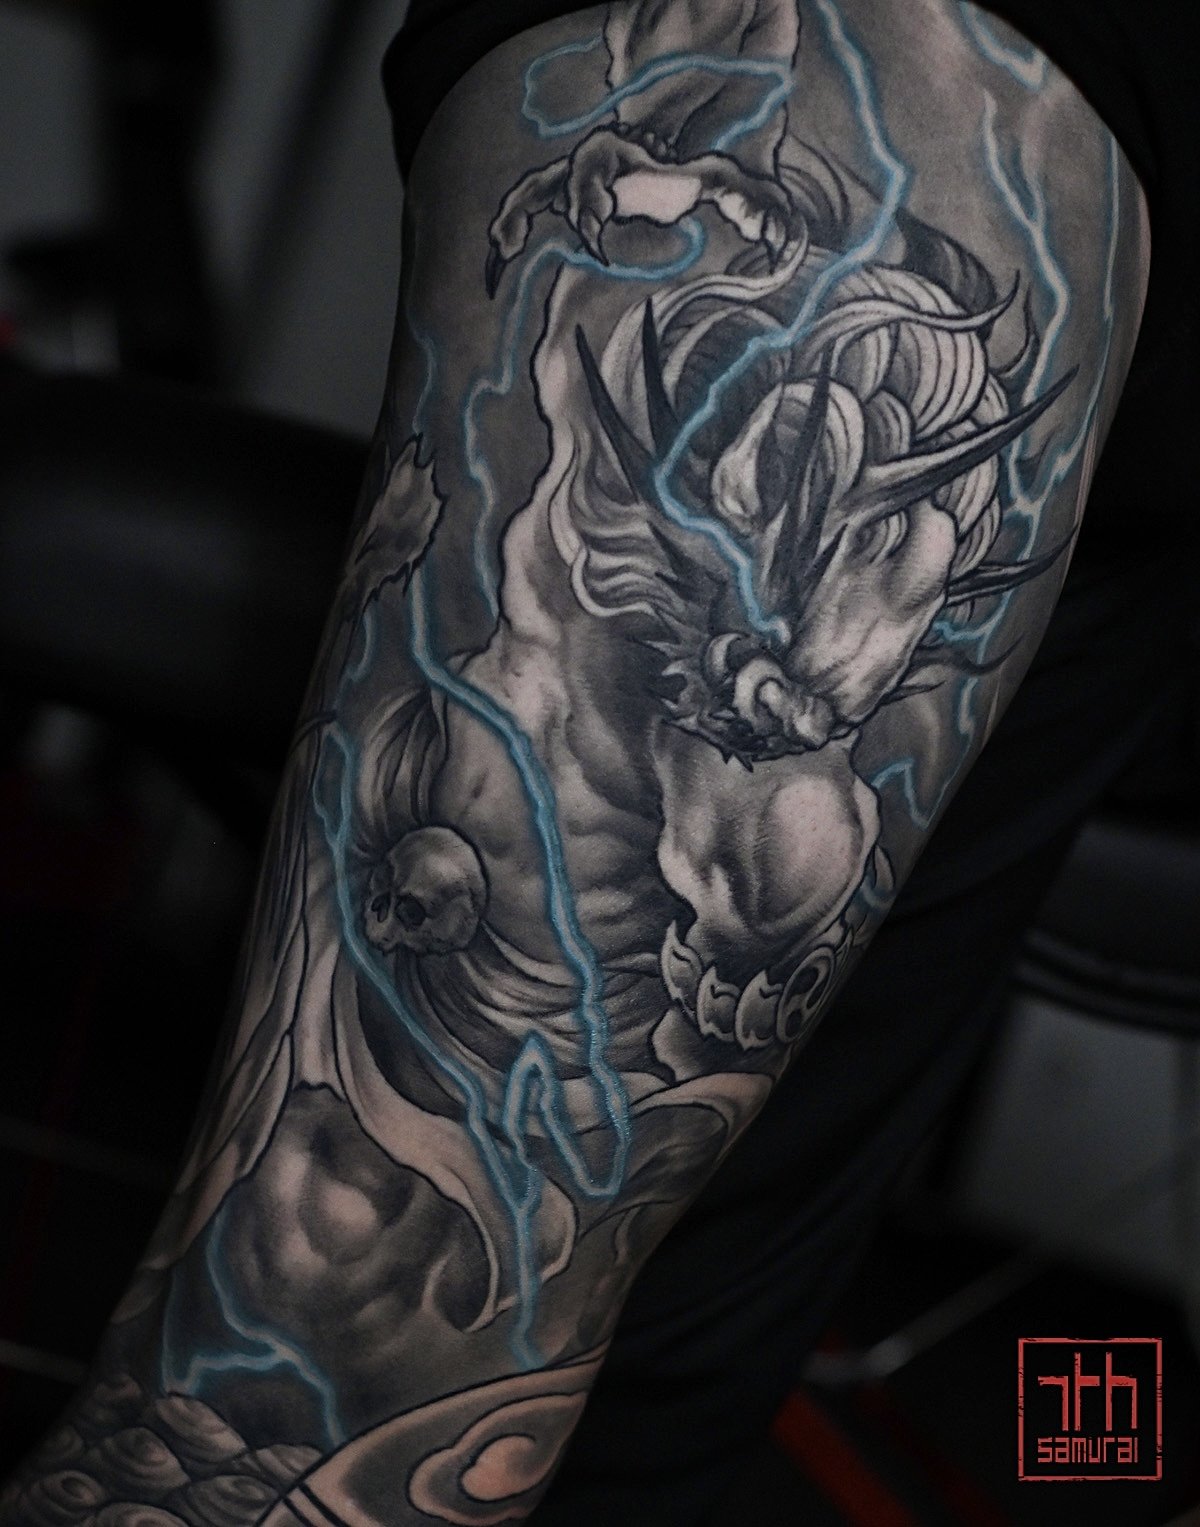 Raijin thunder god Fujin wind god dragon buddha  Men's neo japanese asian leg sleeve tattoo with blue lightning highlights  asian artist: Kai 7th Samurai. YEG Edmonton, Alberta, Canada 2023 best 2024 